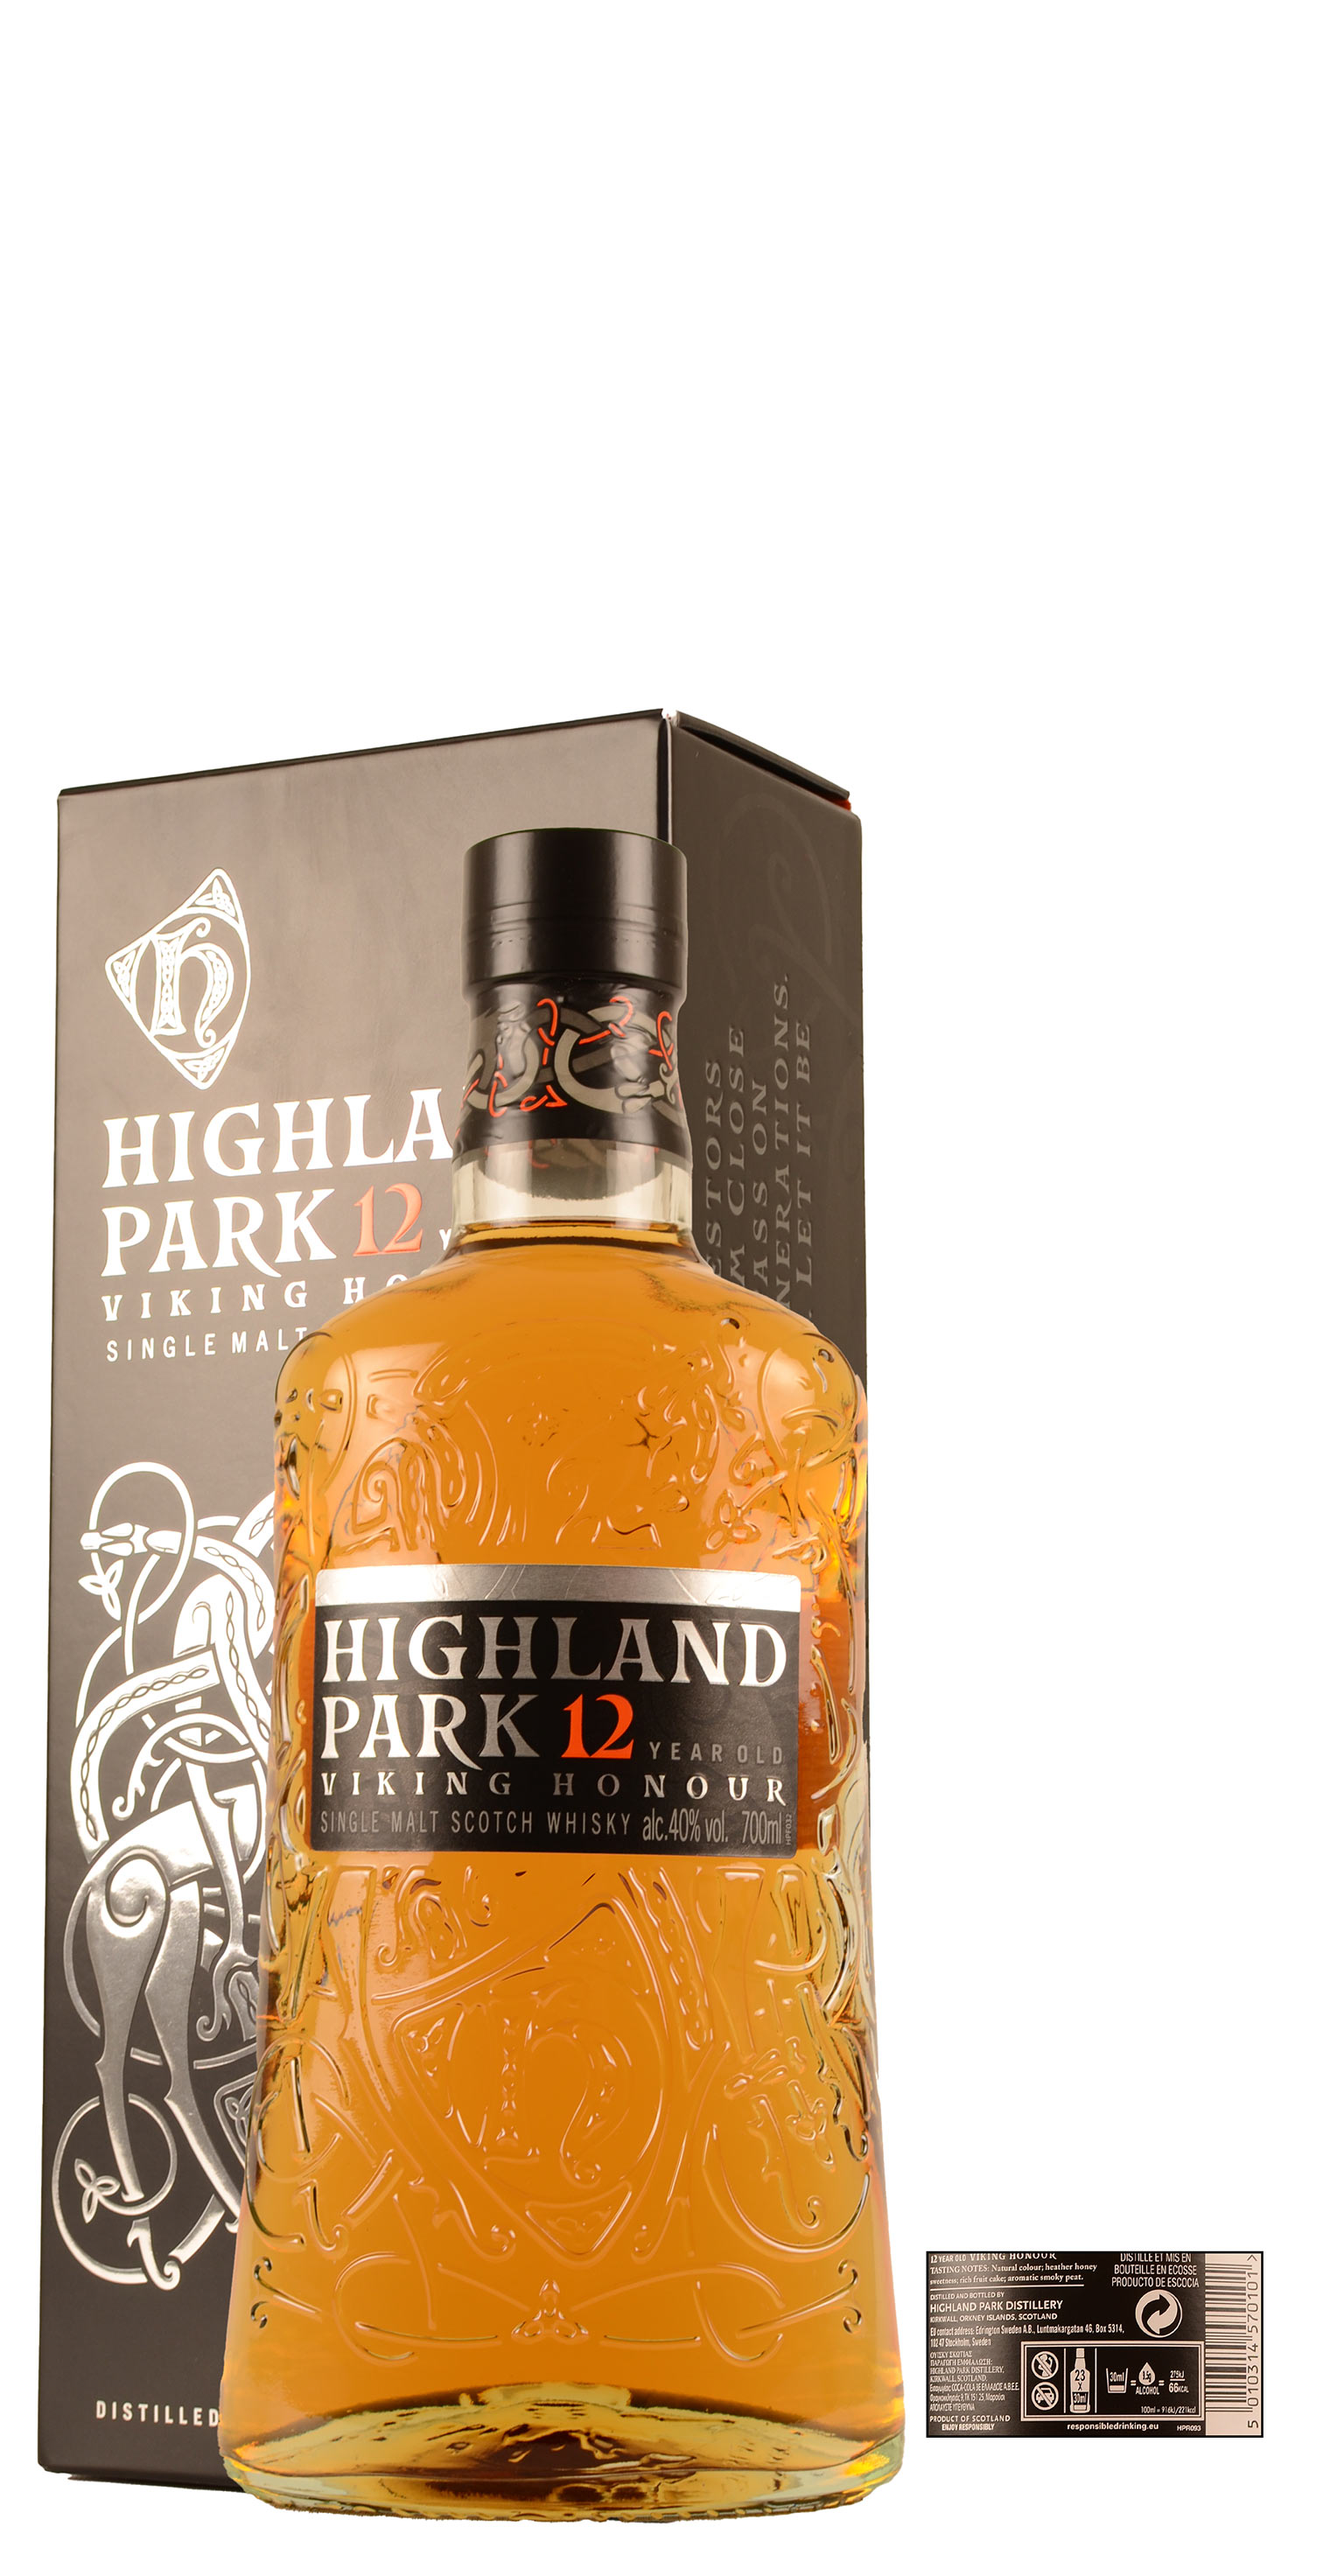 Single Malt Scotch Whisky 12 Years Old Viking Honour Highland Park